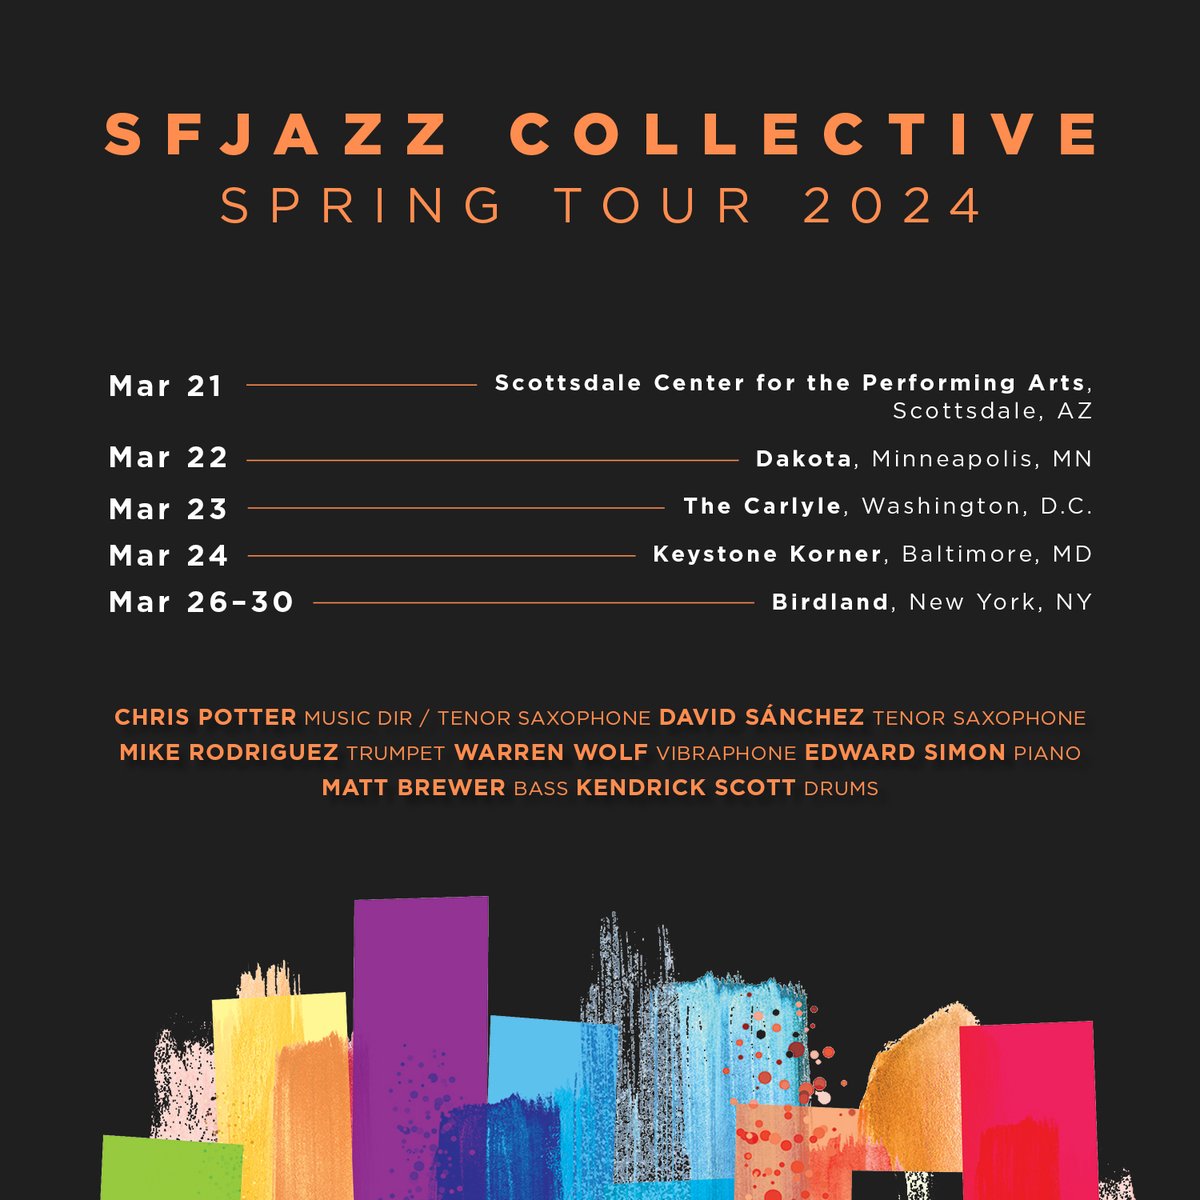 .@SFJAZZCollectiv Spring Tour, March 21-30th: Mar 21: Scottsdale Center for the Performing Arts (Scottsdale) Mar 22: Dakota (Minneapolis Mar 23: Carlyle Room (D.C.) Mar 24: Keystone Korner (Baltimore) Mar 26-30: Birdland (NYC) SFJAZZ.org/Collective